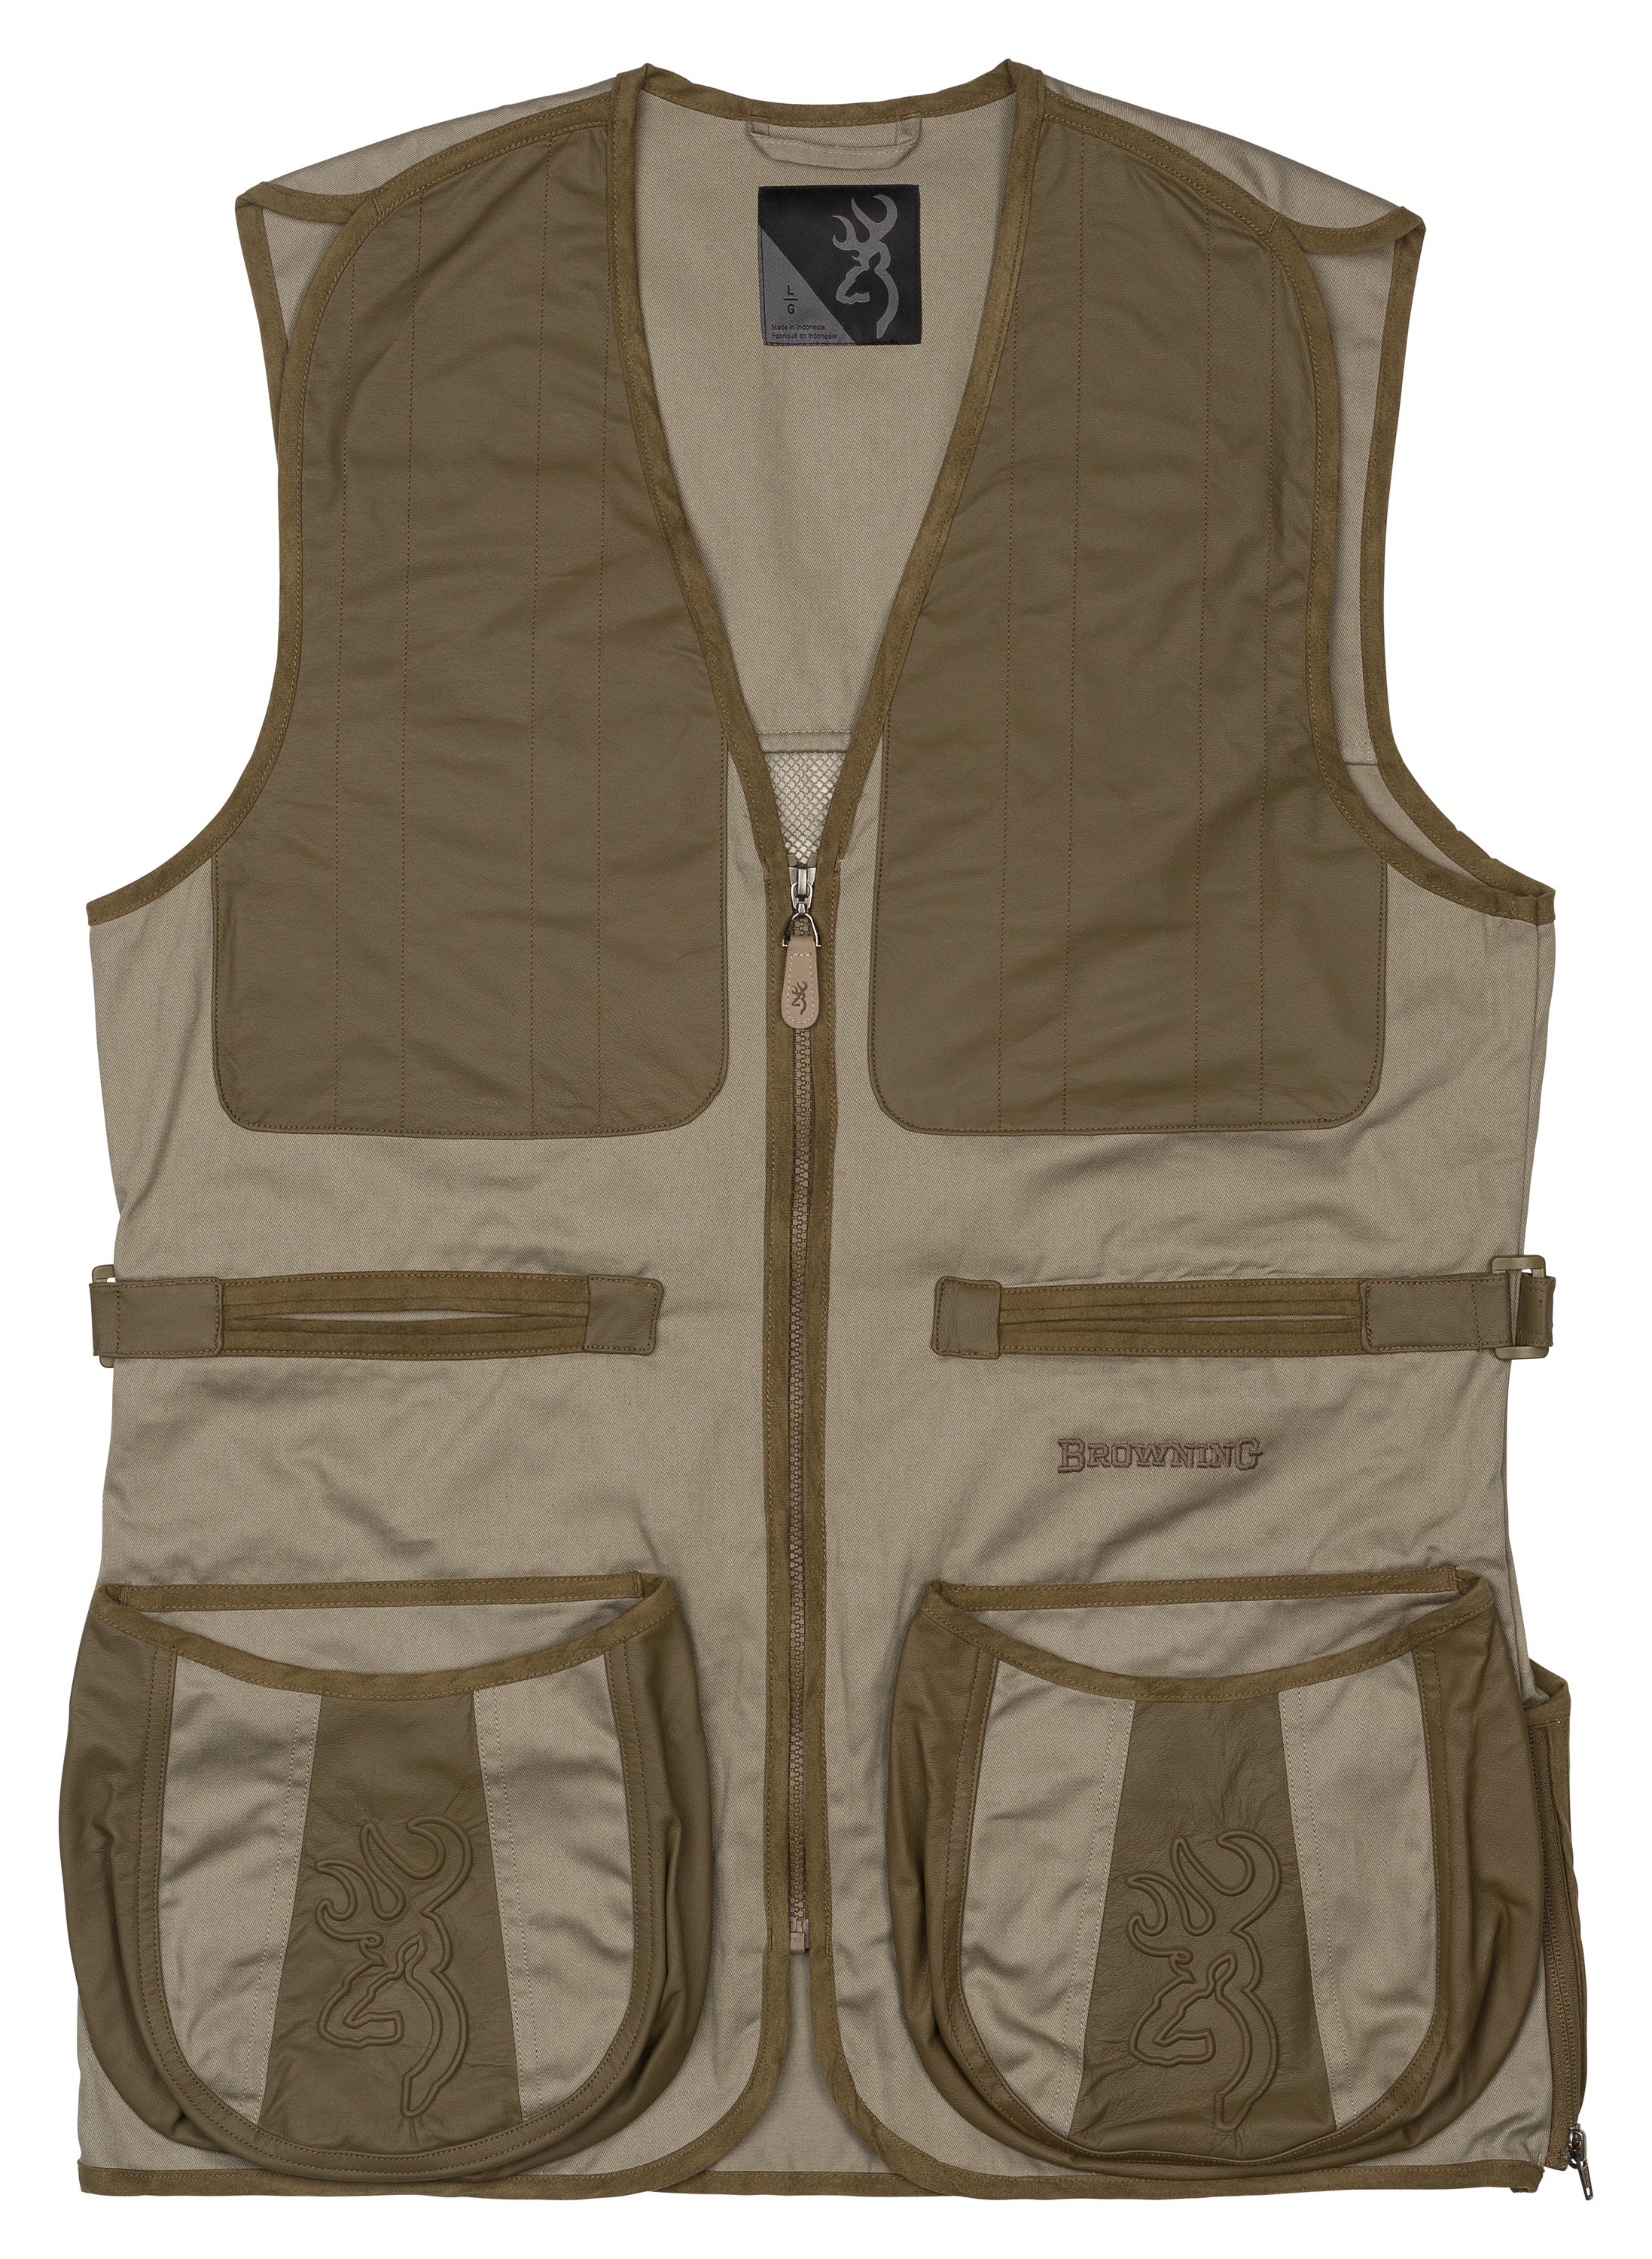 New Browning Master-Lite Black Shooting Vest XL 3050309904 